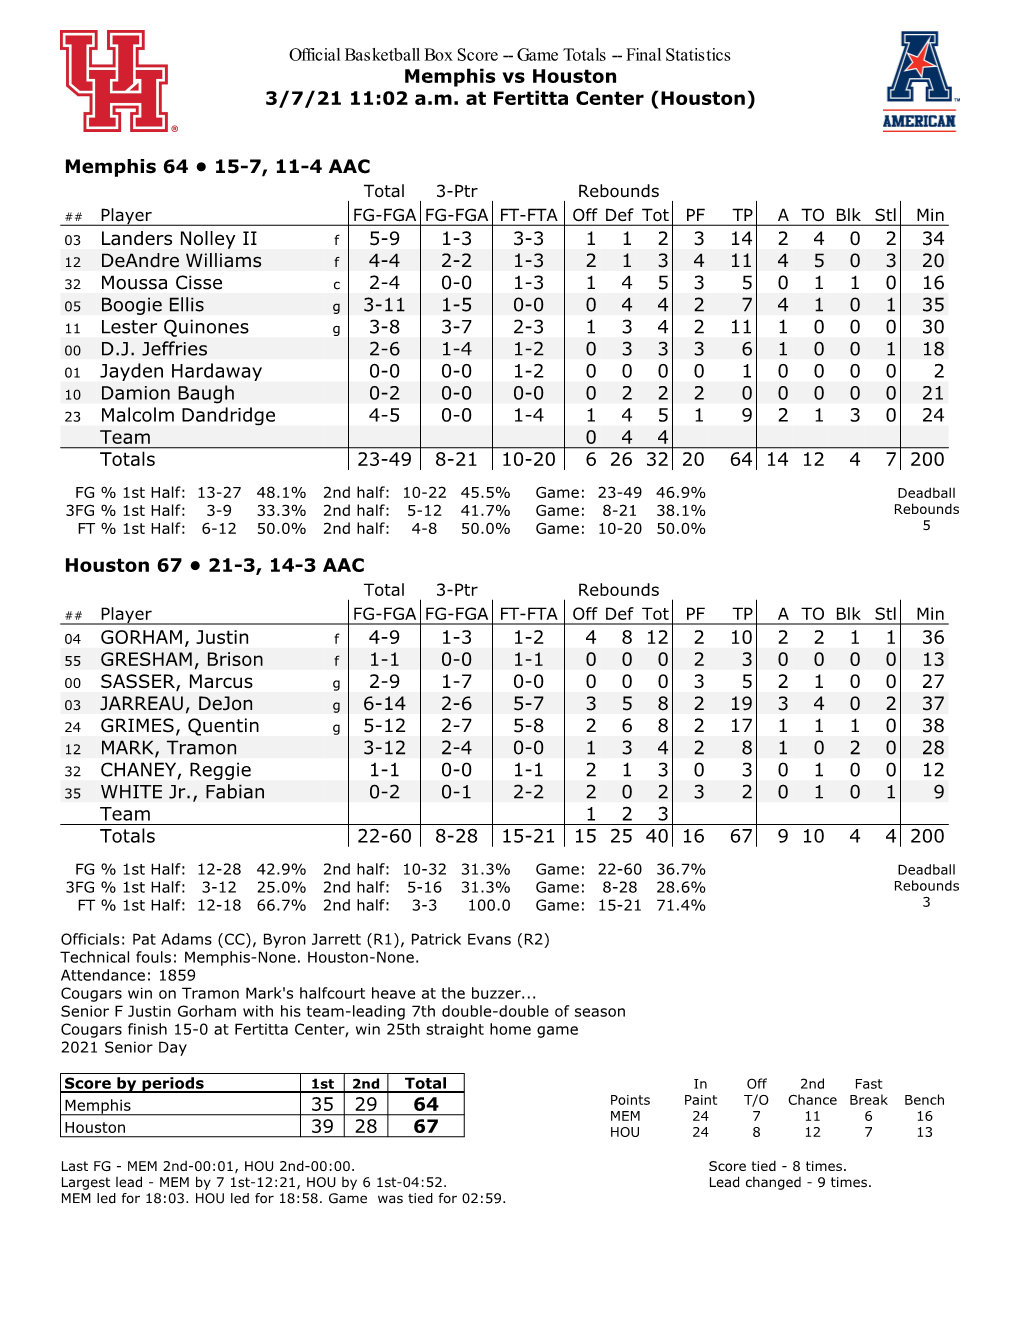 Official Basketball Box Score -- Game Totals -- Final Statistics Memphis Vs Houston 3/7/21 11:02 A.M